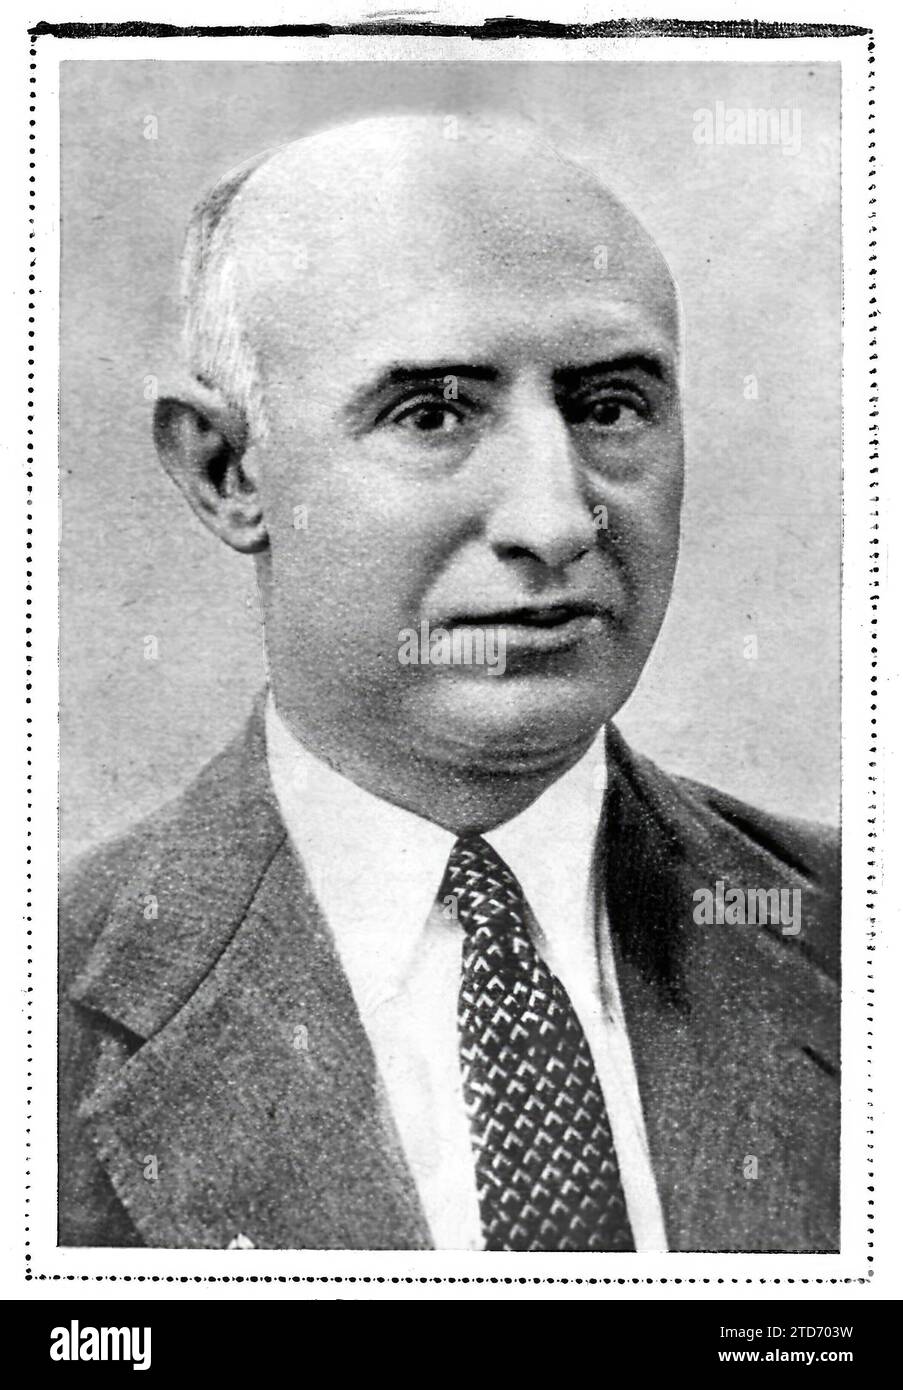 12/31/1932. Portrait of the banker Juan March - Approximate date. Credit: Album / Archivo ABC Stock Photo